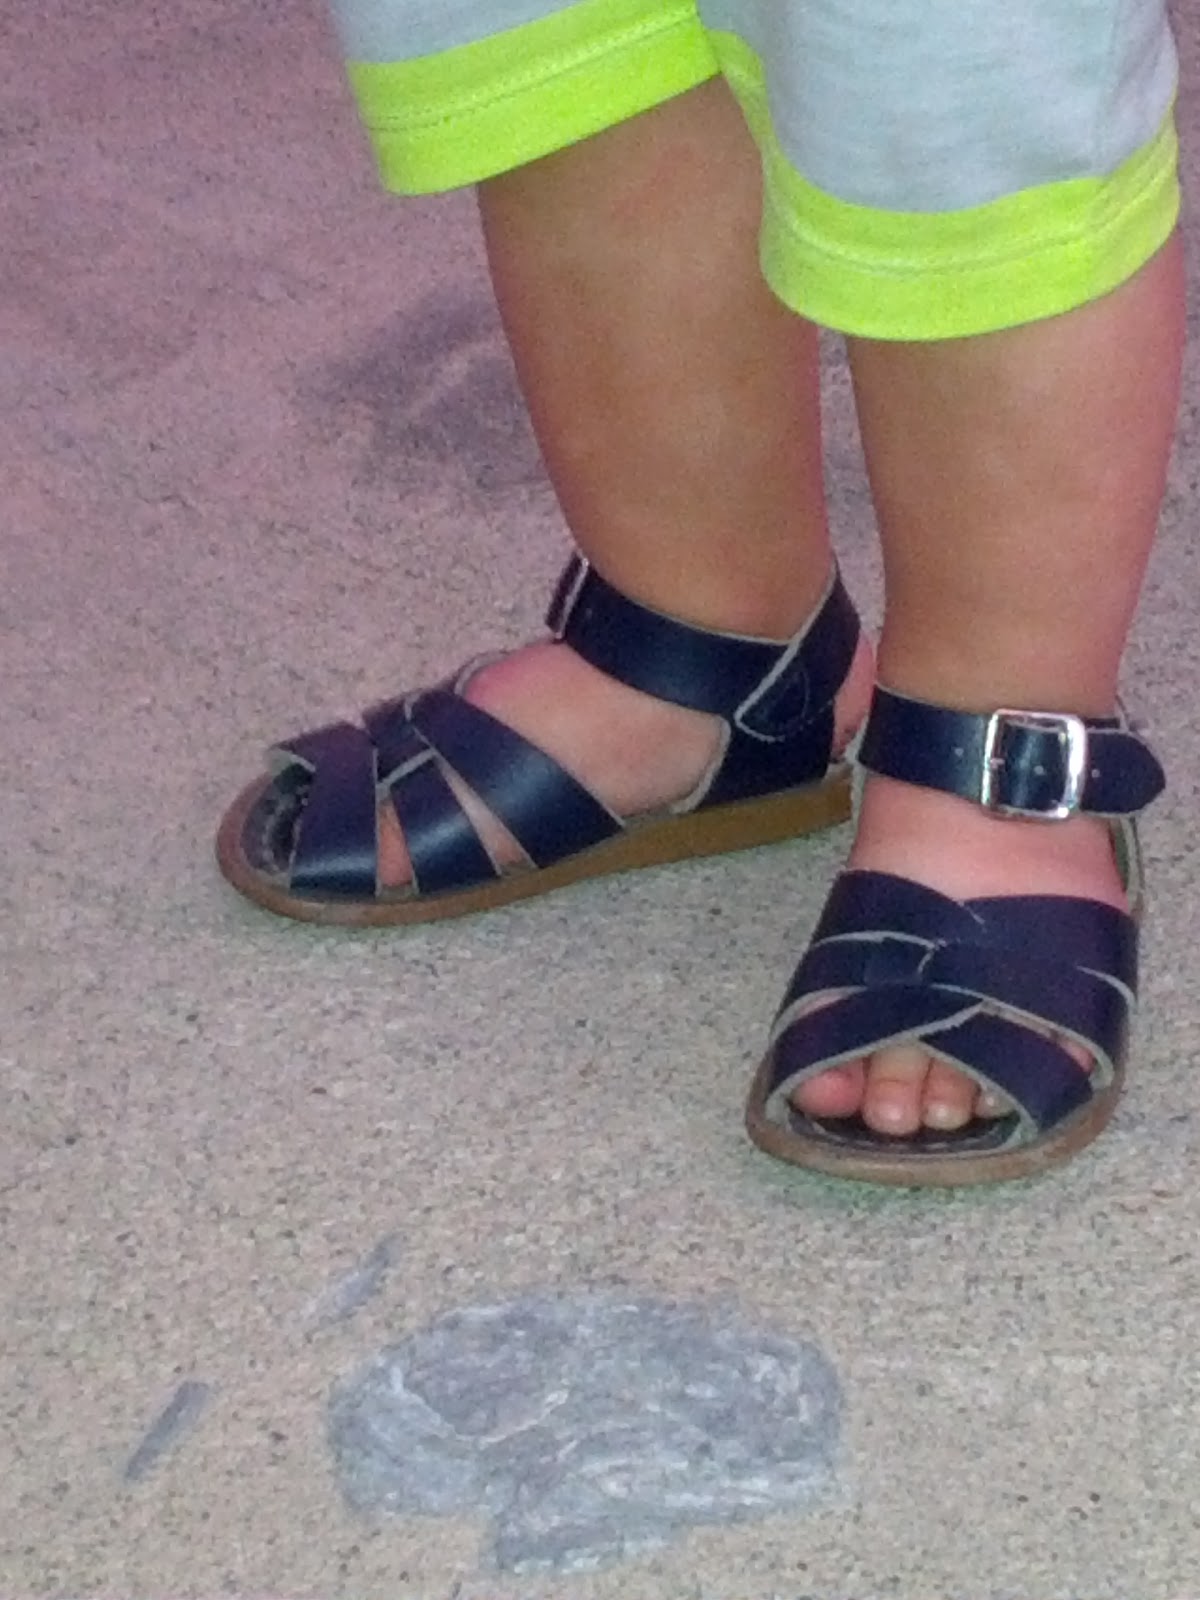 Worn sandals. Sandal Stick. Boy wearing Sandals. Shoe bound to face.